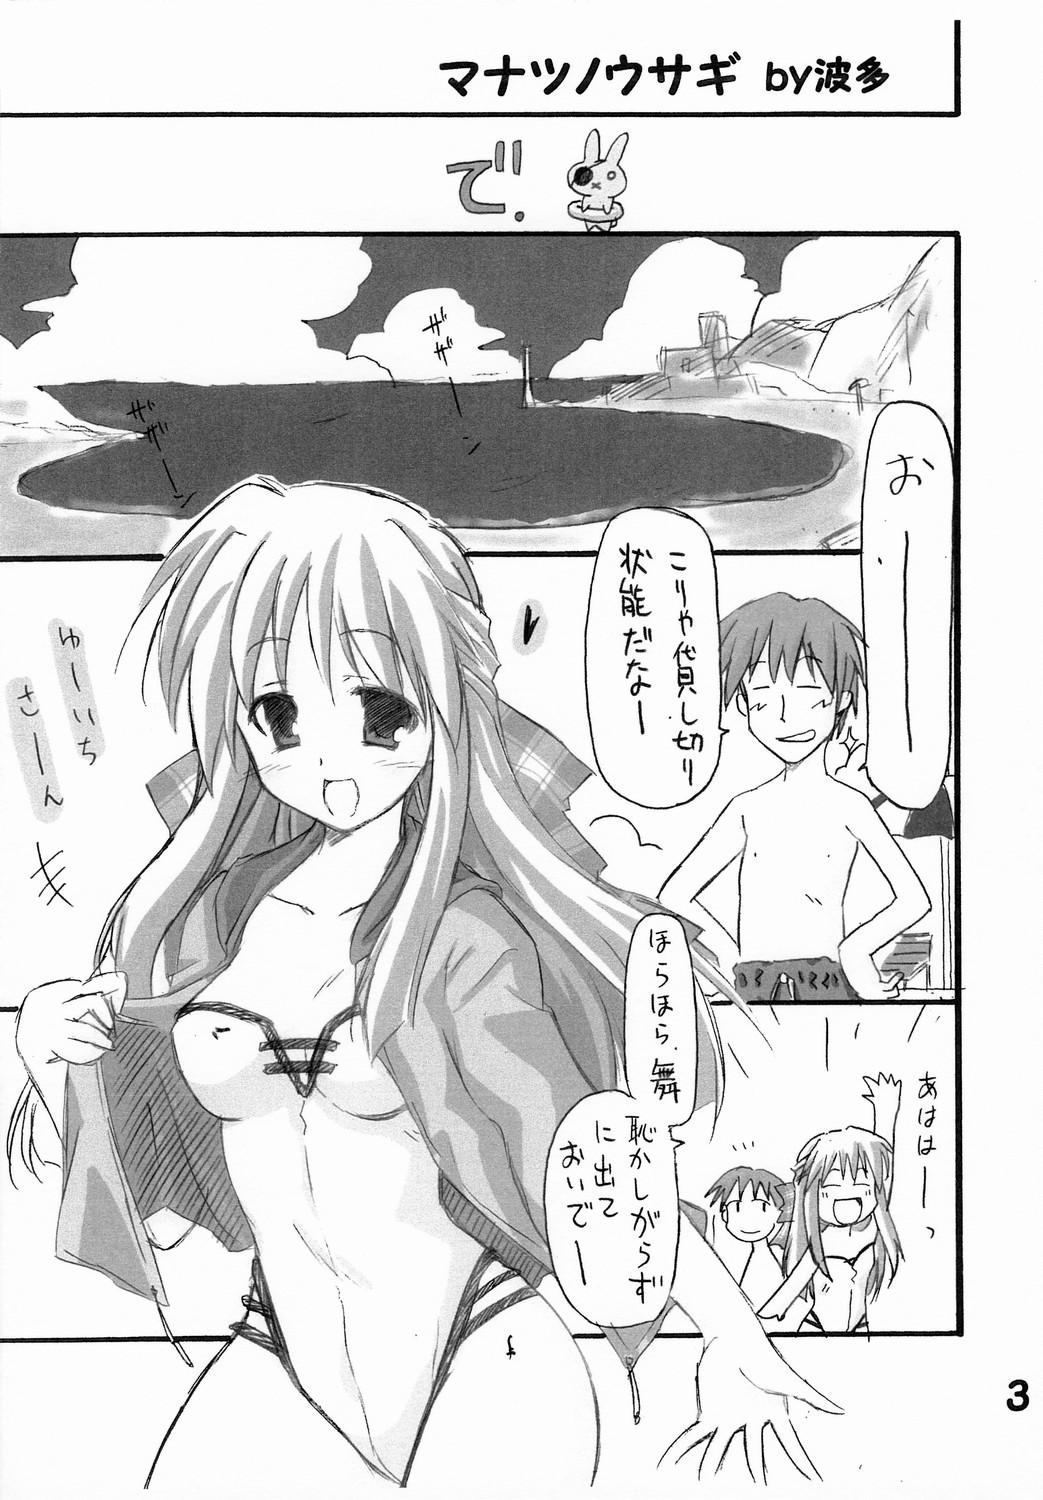 Long Hair Haru na no ni - Manatsu no Usagi - Kanon India - Page 4